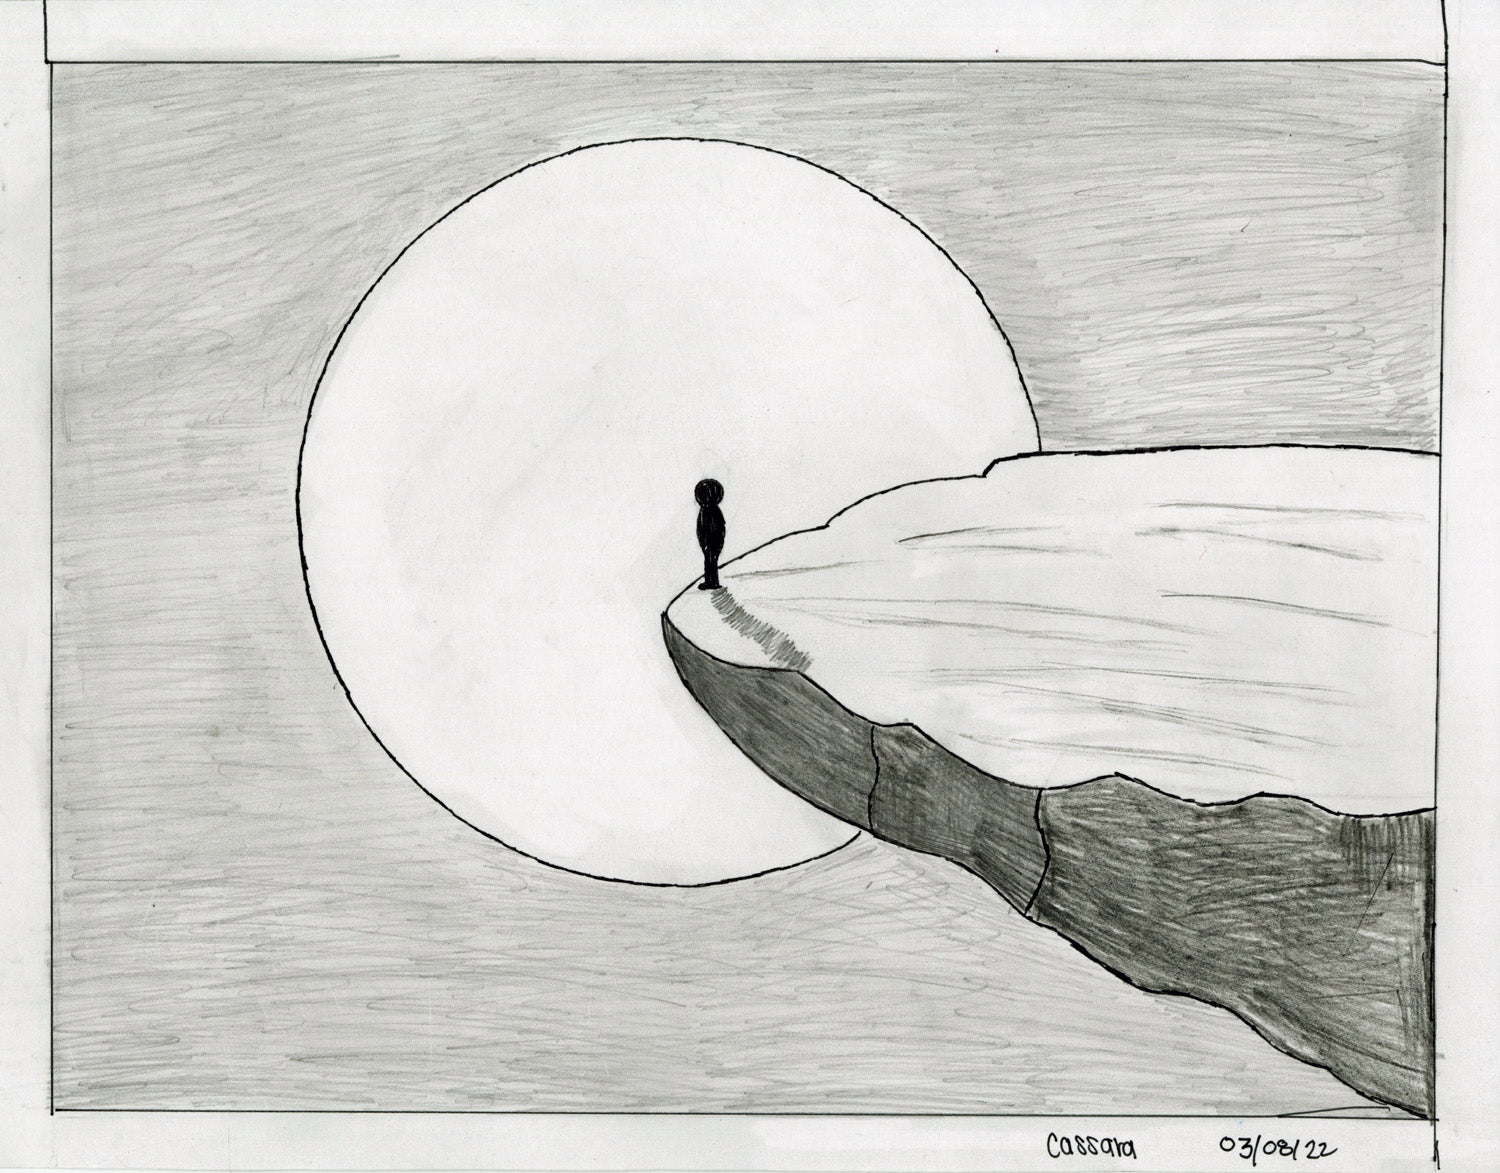 drawings of feeling alone